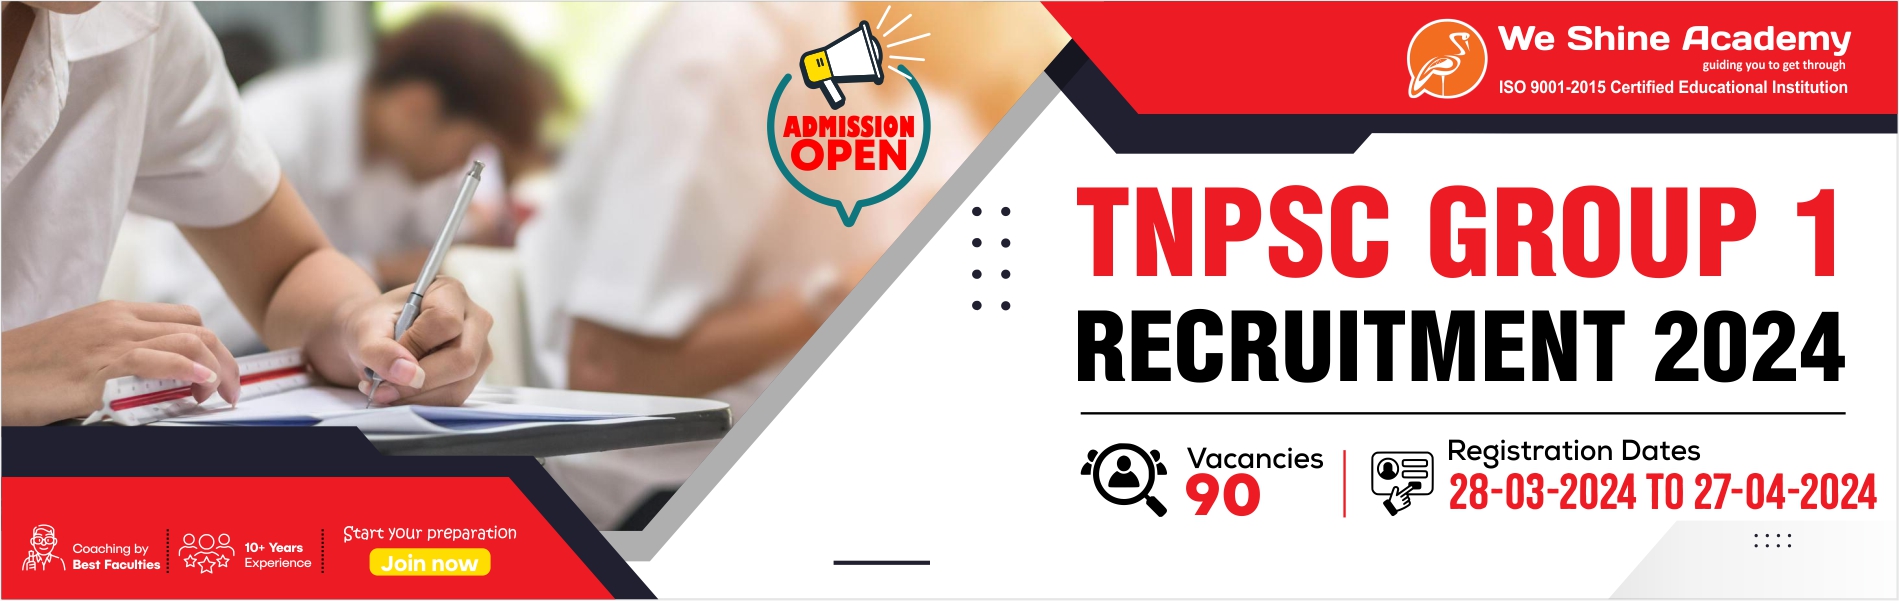 TNPSC Group 1 Recruitment 2024-Notification-